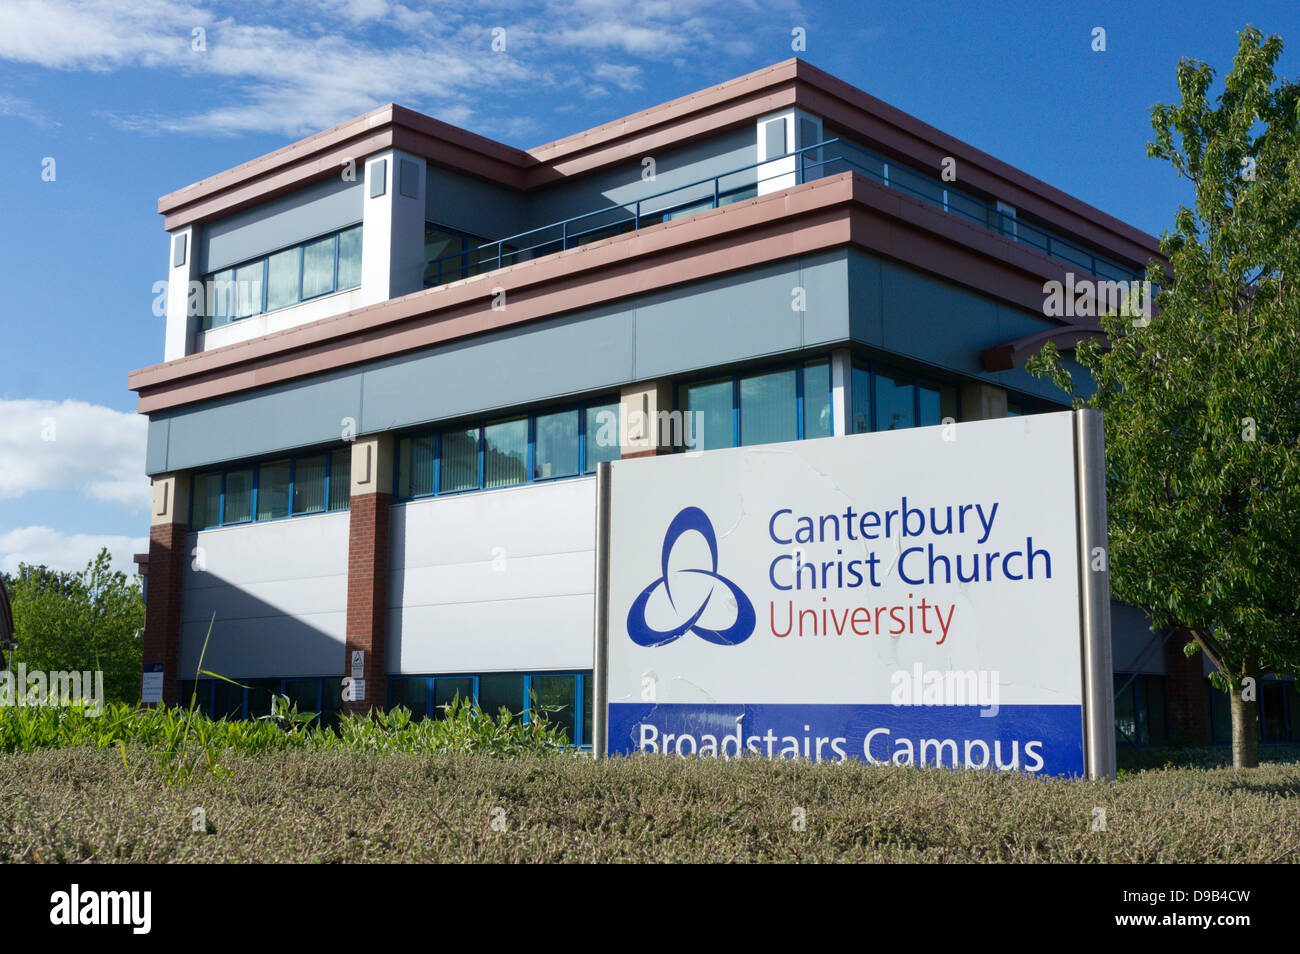 La Broadstairs Campus de Canterbury Christ Church University. Foto de stock